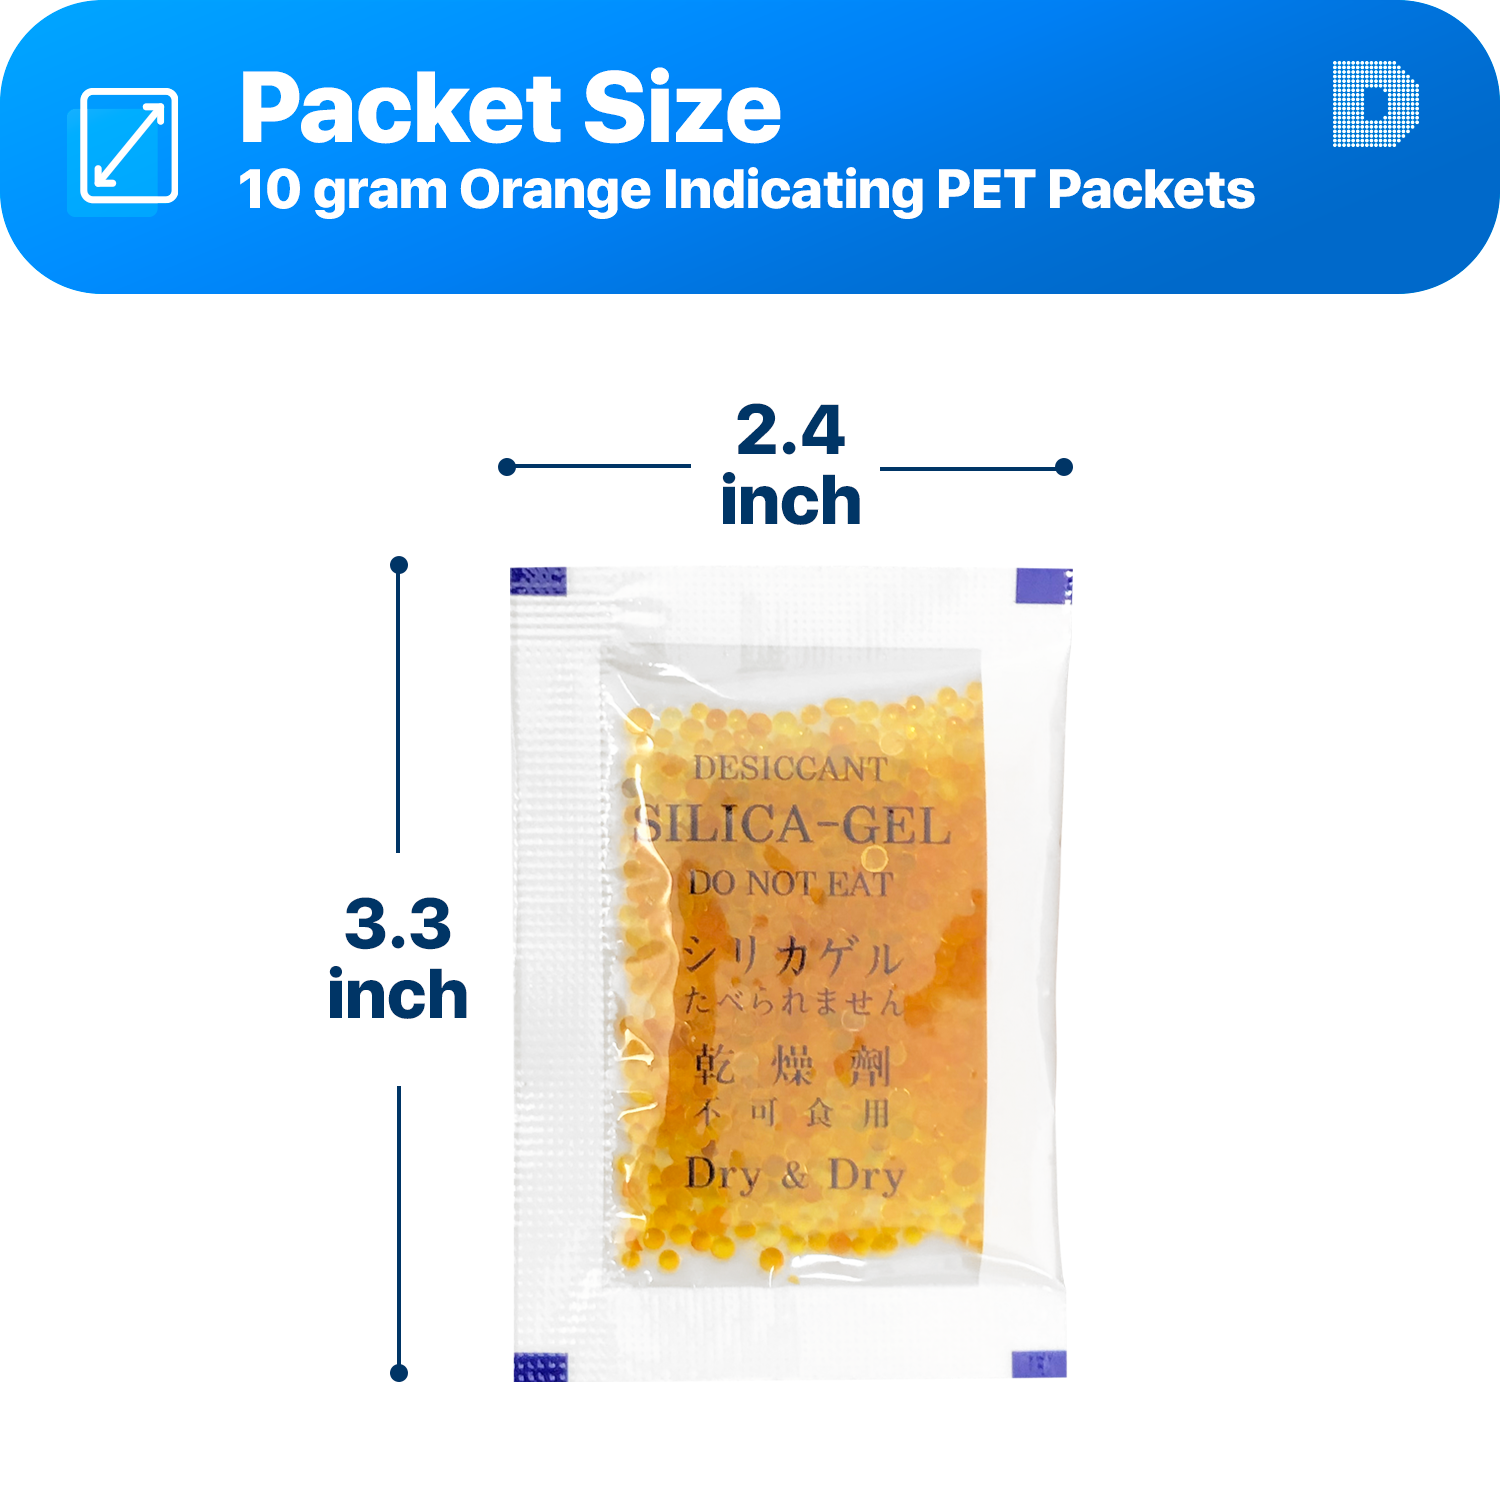 10 Gram Orange Indicating Clear Plastic(PET) Silica Gel Packets